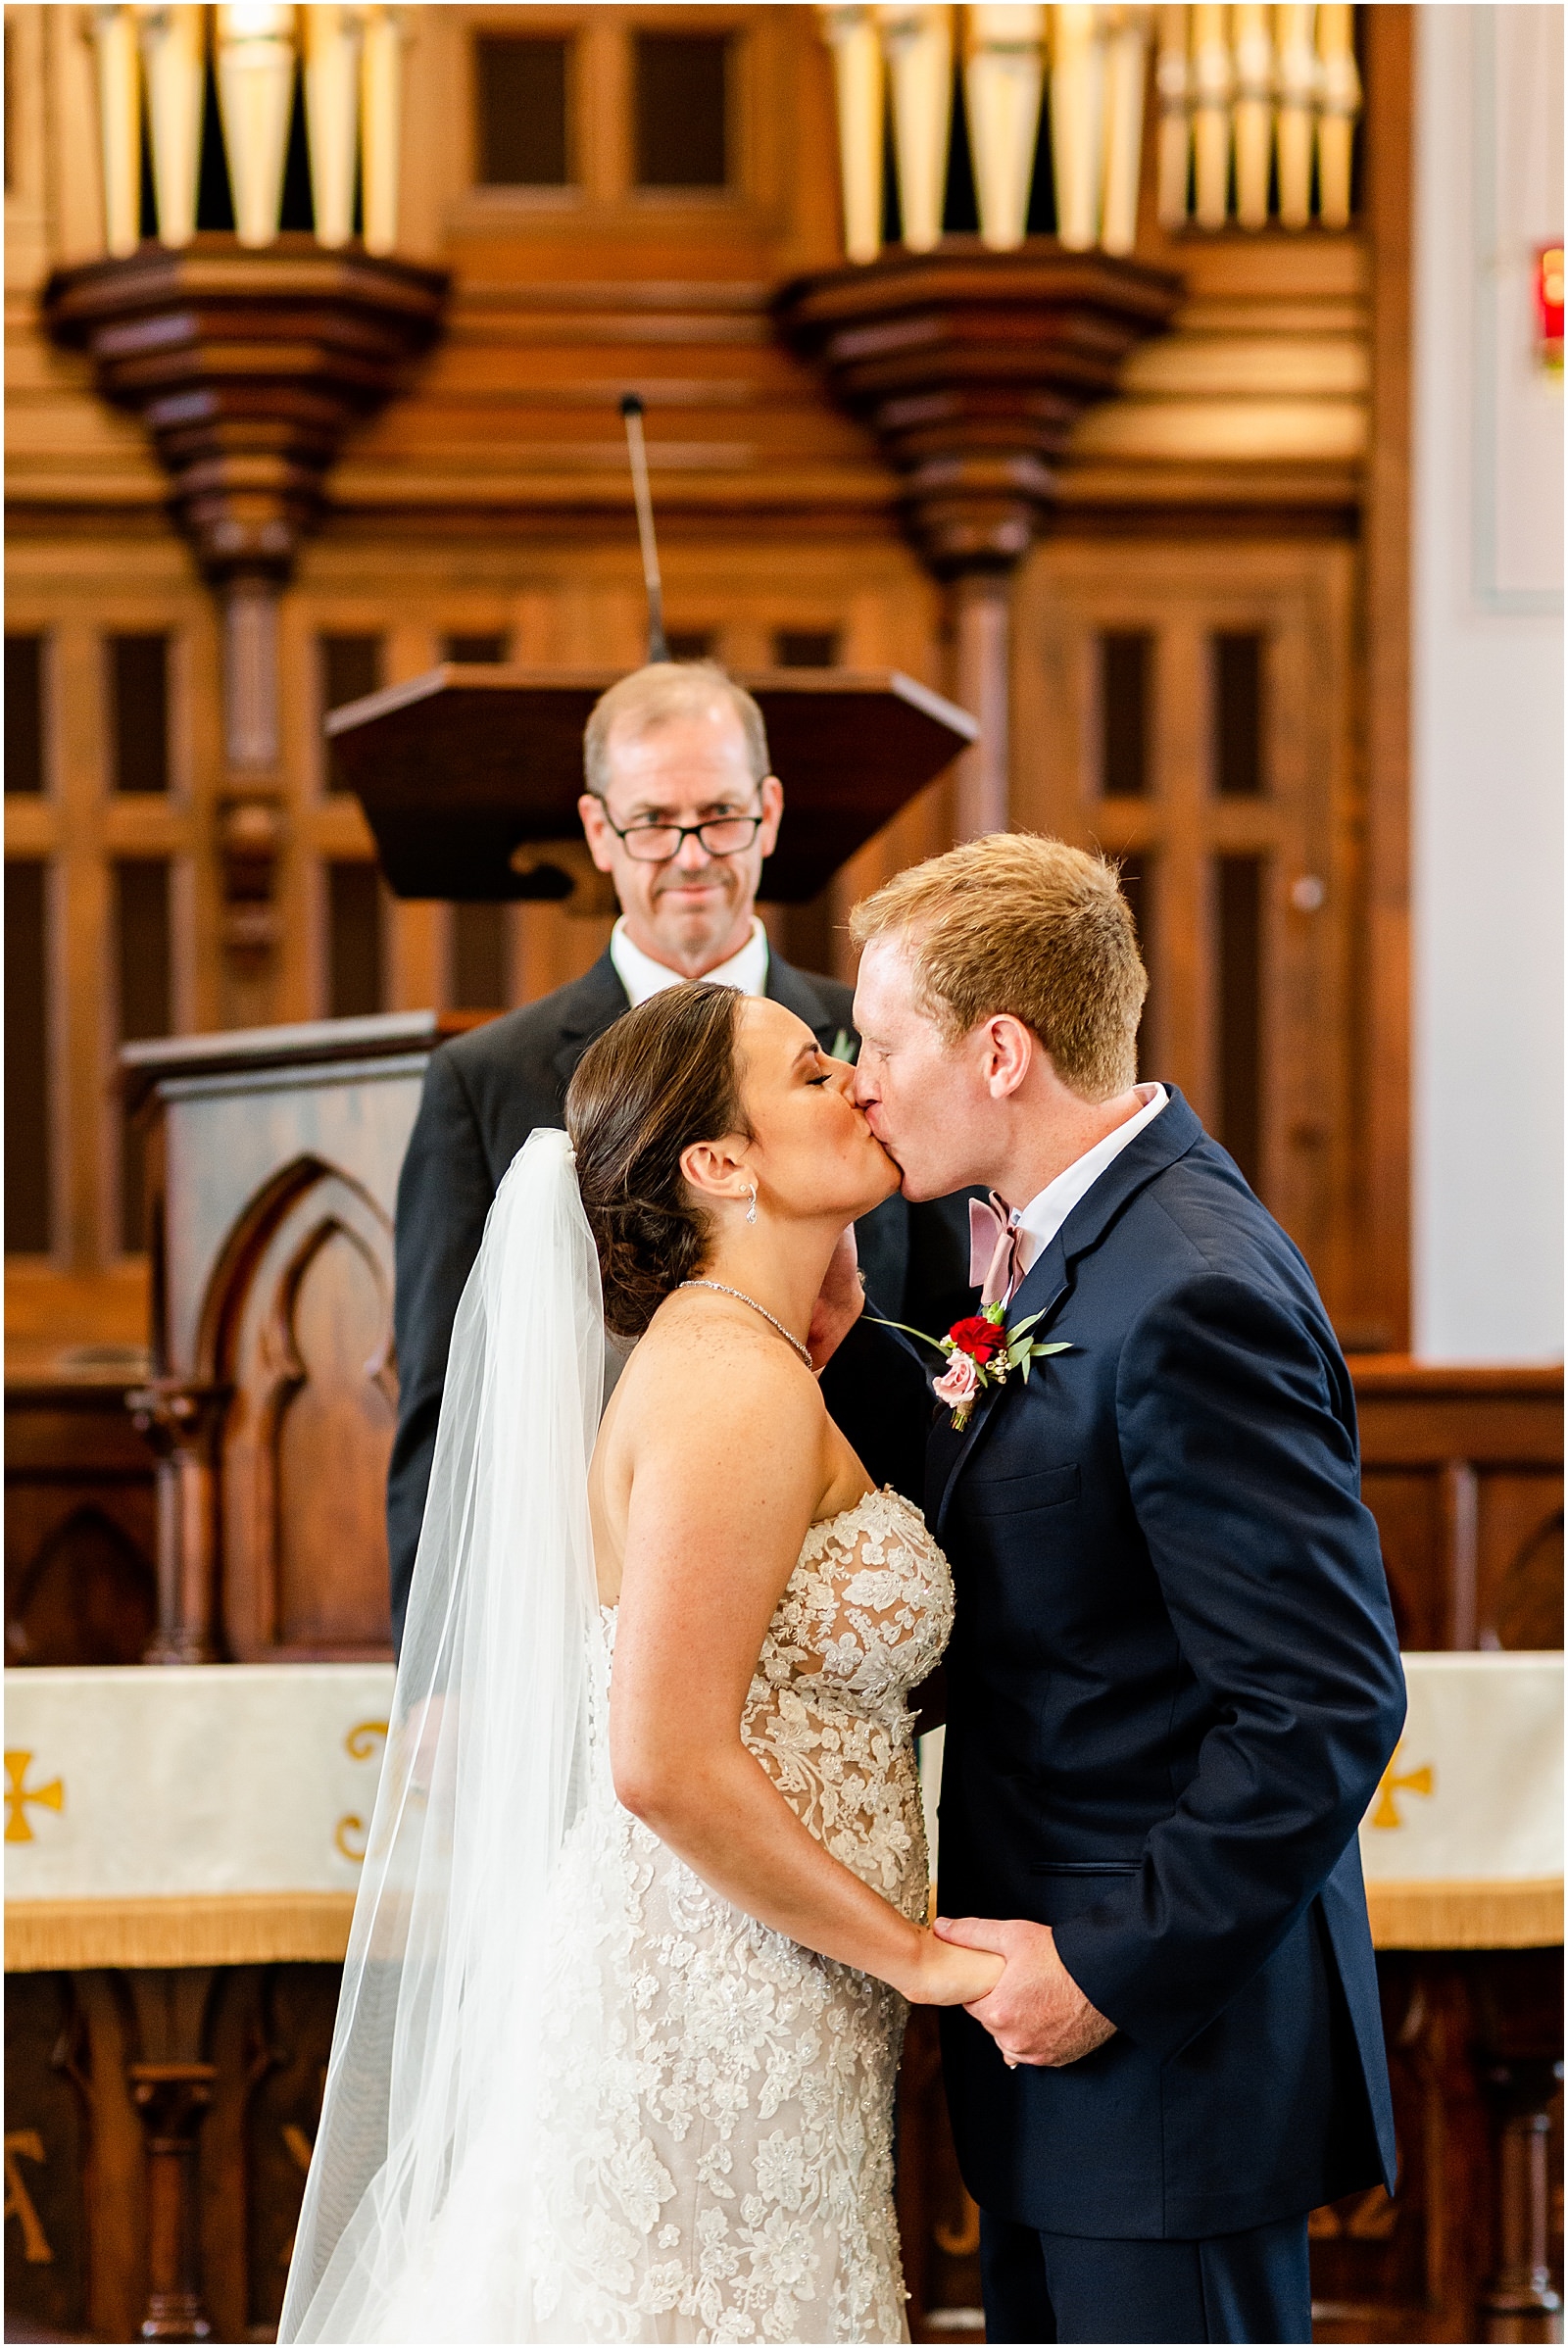 Deidra and Andrew | A Huntingburgh Indiana Wedding Bret and Brandie | Evansville Photographers | @bretandbrandie-0111.jpg